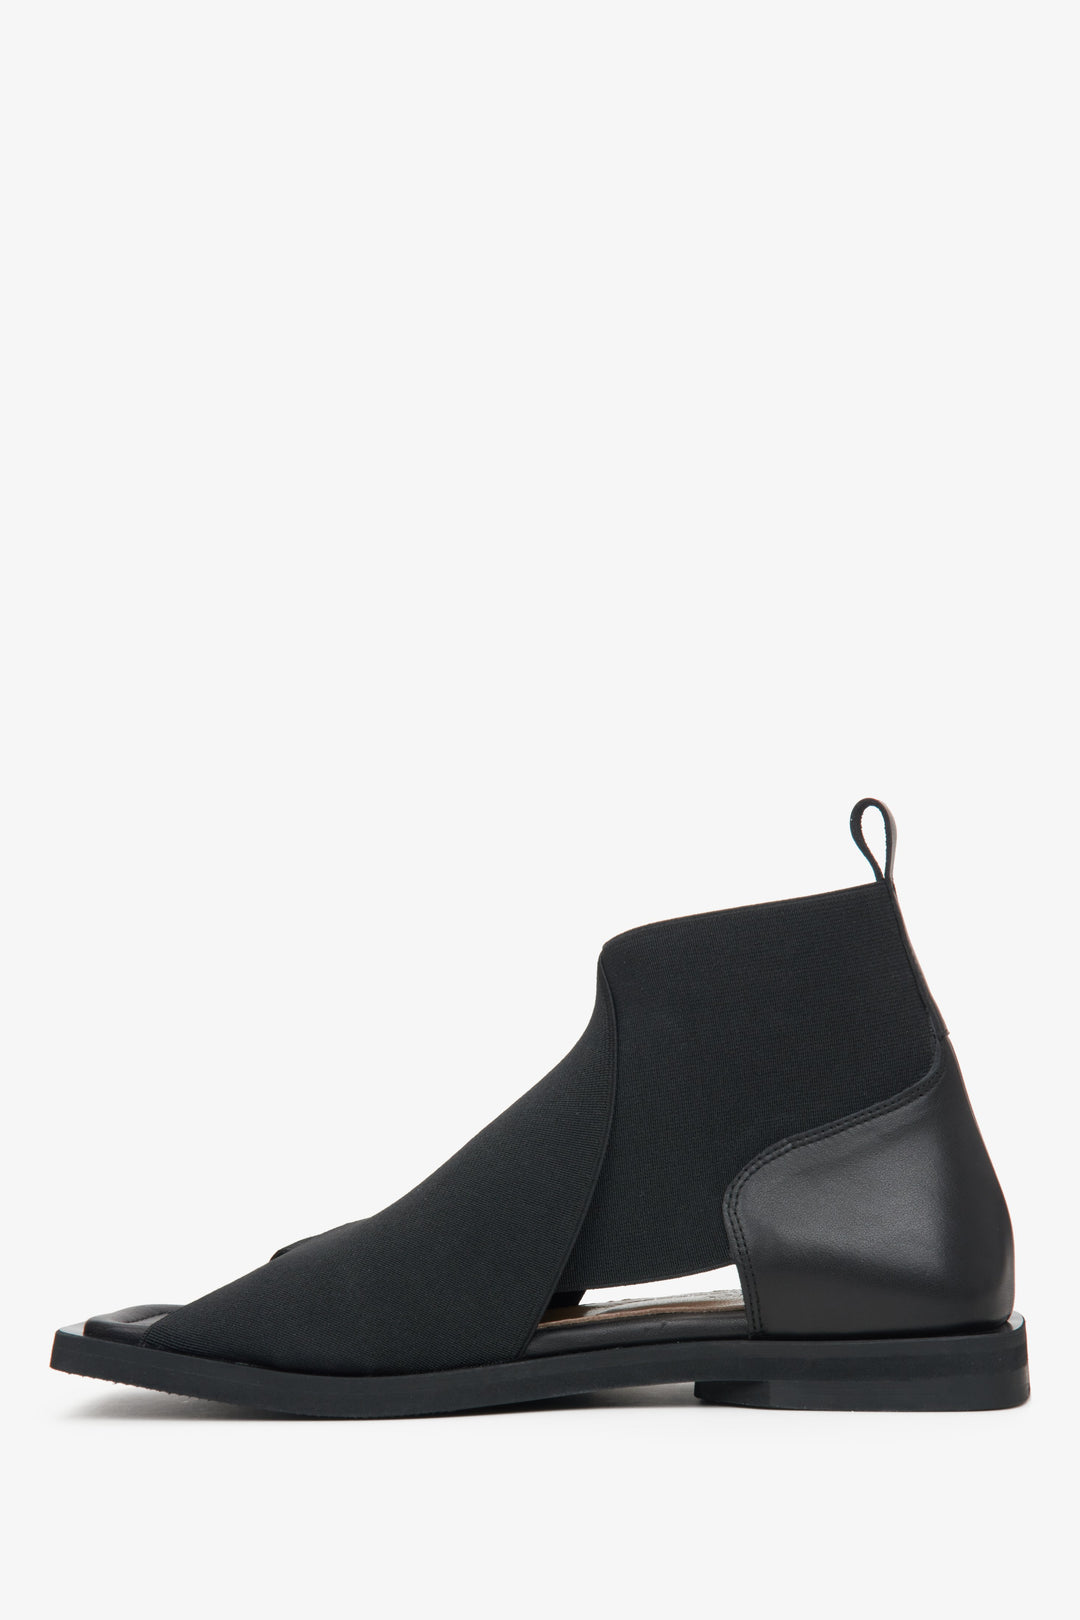 Comfortable women's black  sandals with soft straps by Estro - shoe profile.